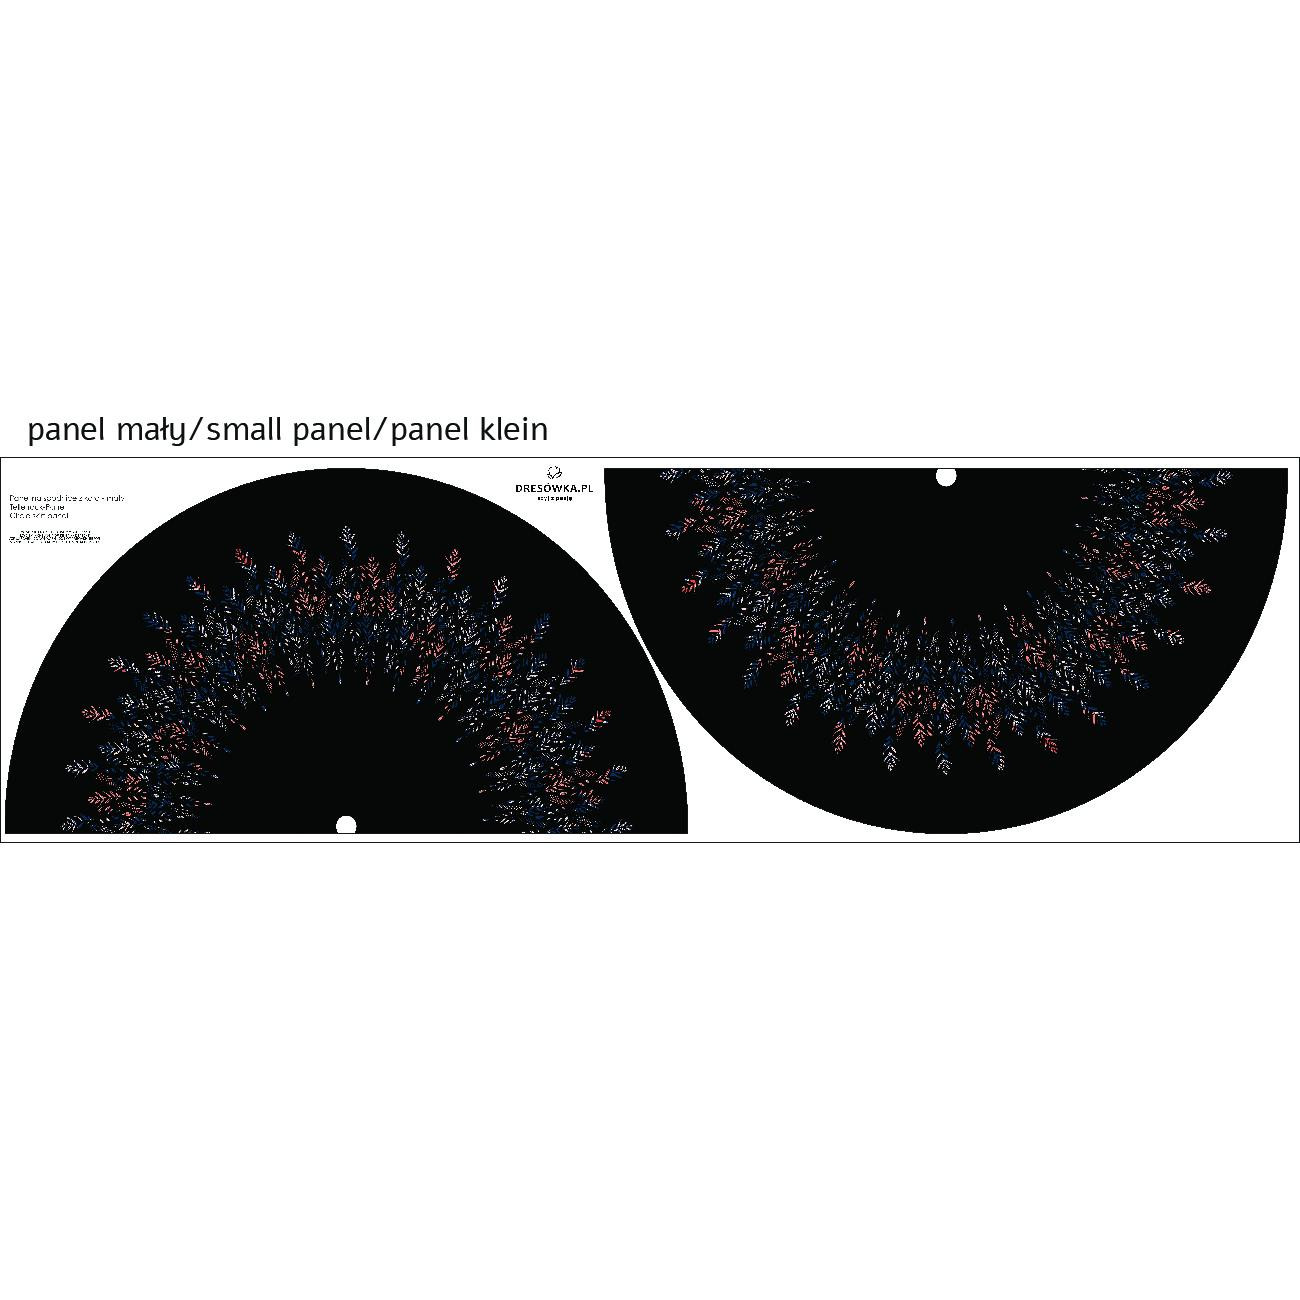 LEAVES PAT. 3 / BLACK - circle skirt panel